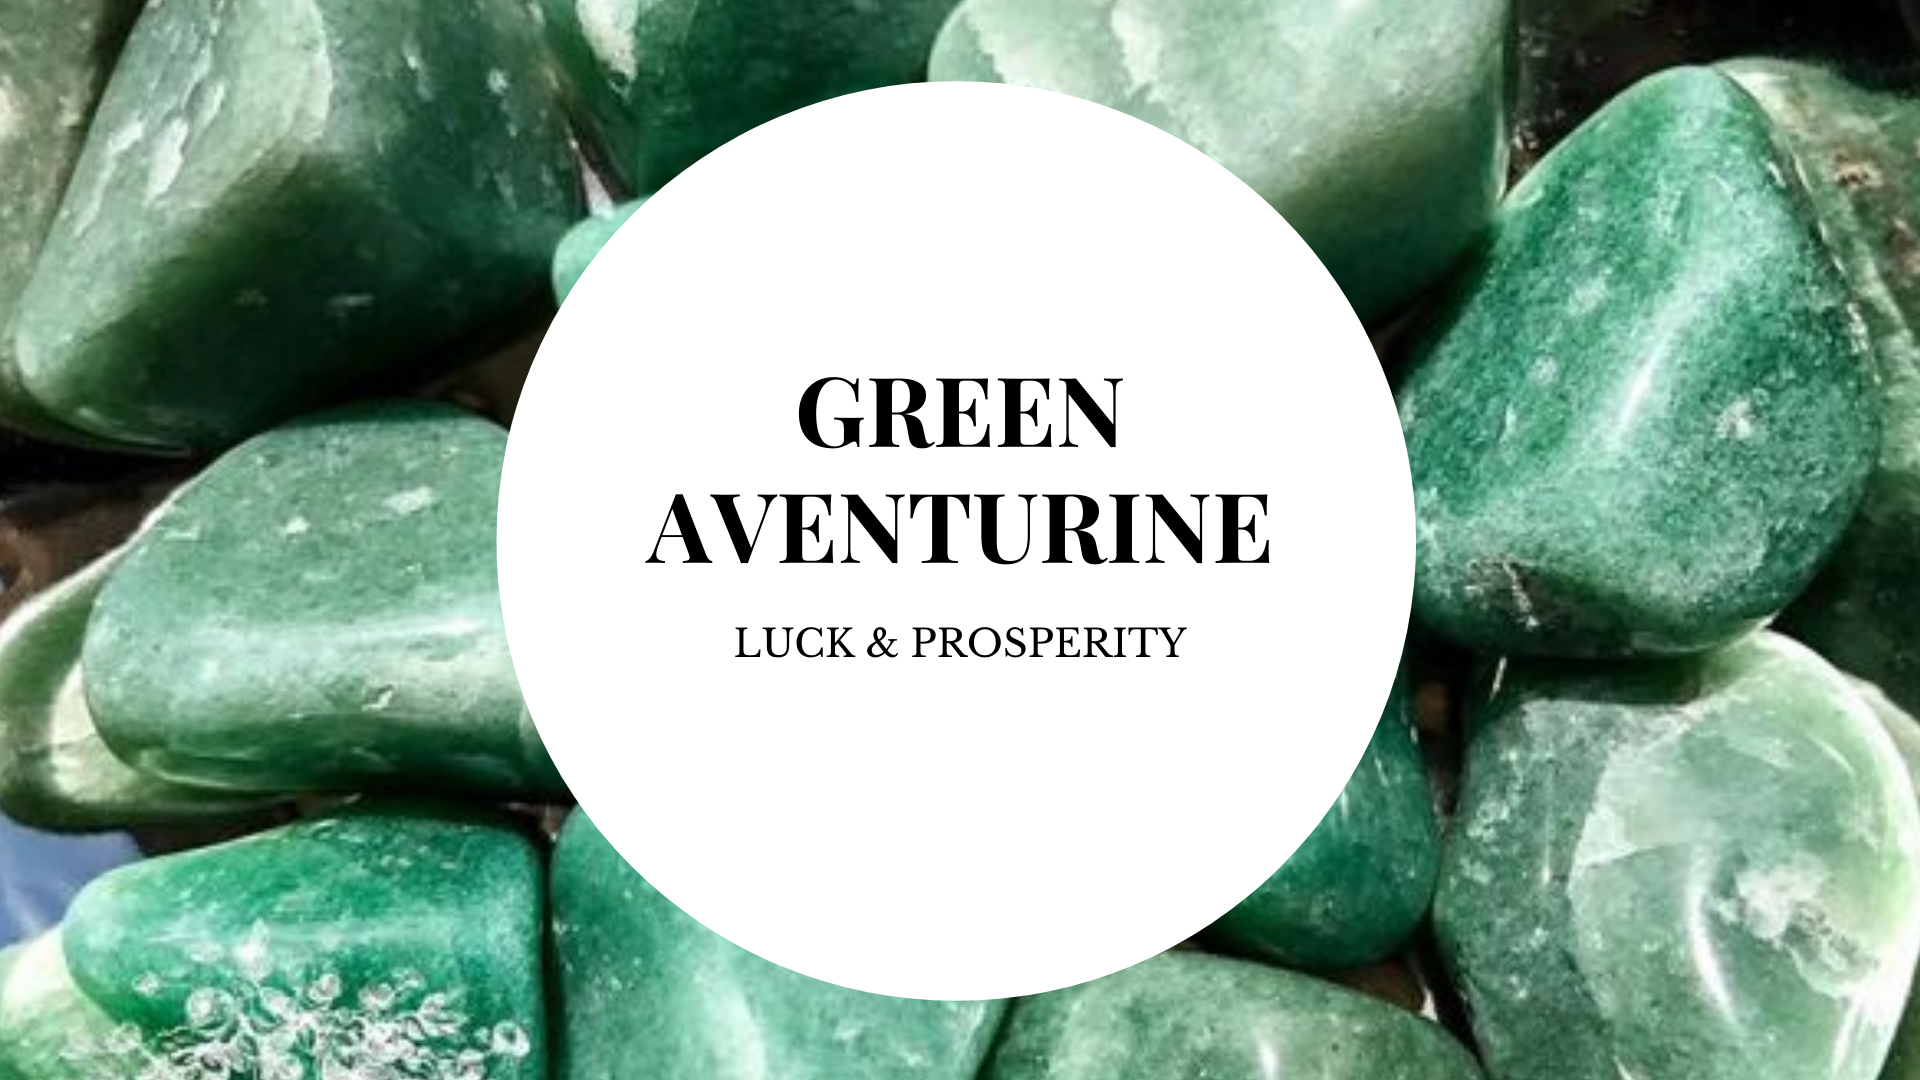 Green Aventurine Healing Properties Green Aventurine Meaning Benefits Of Green Aventurine